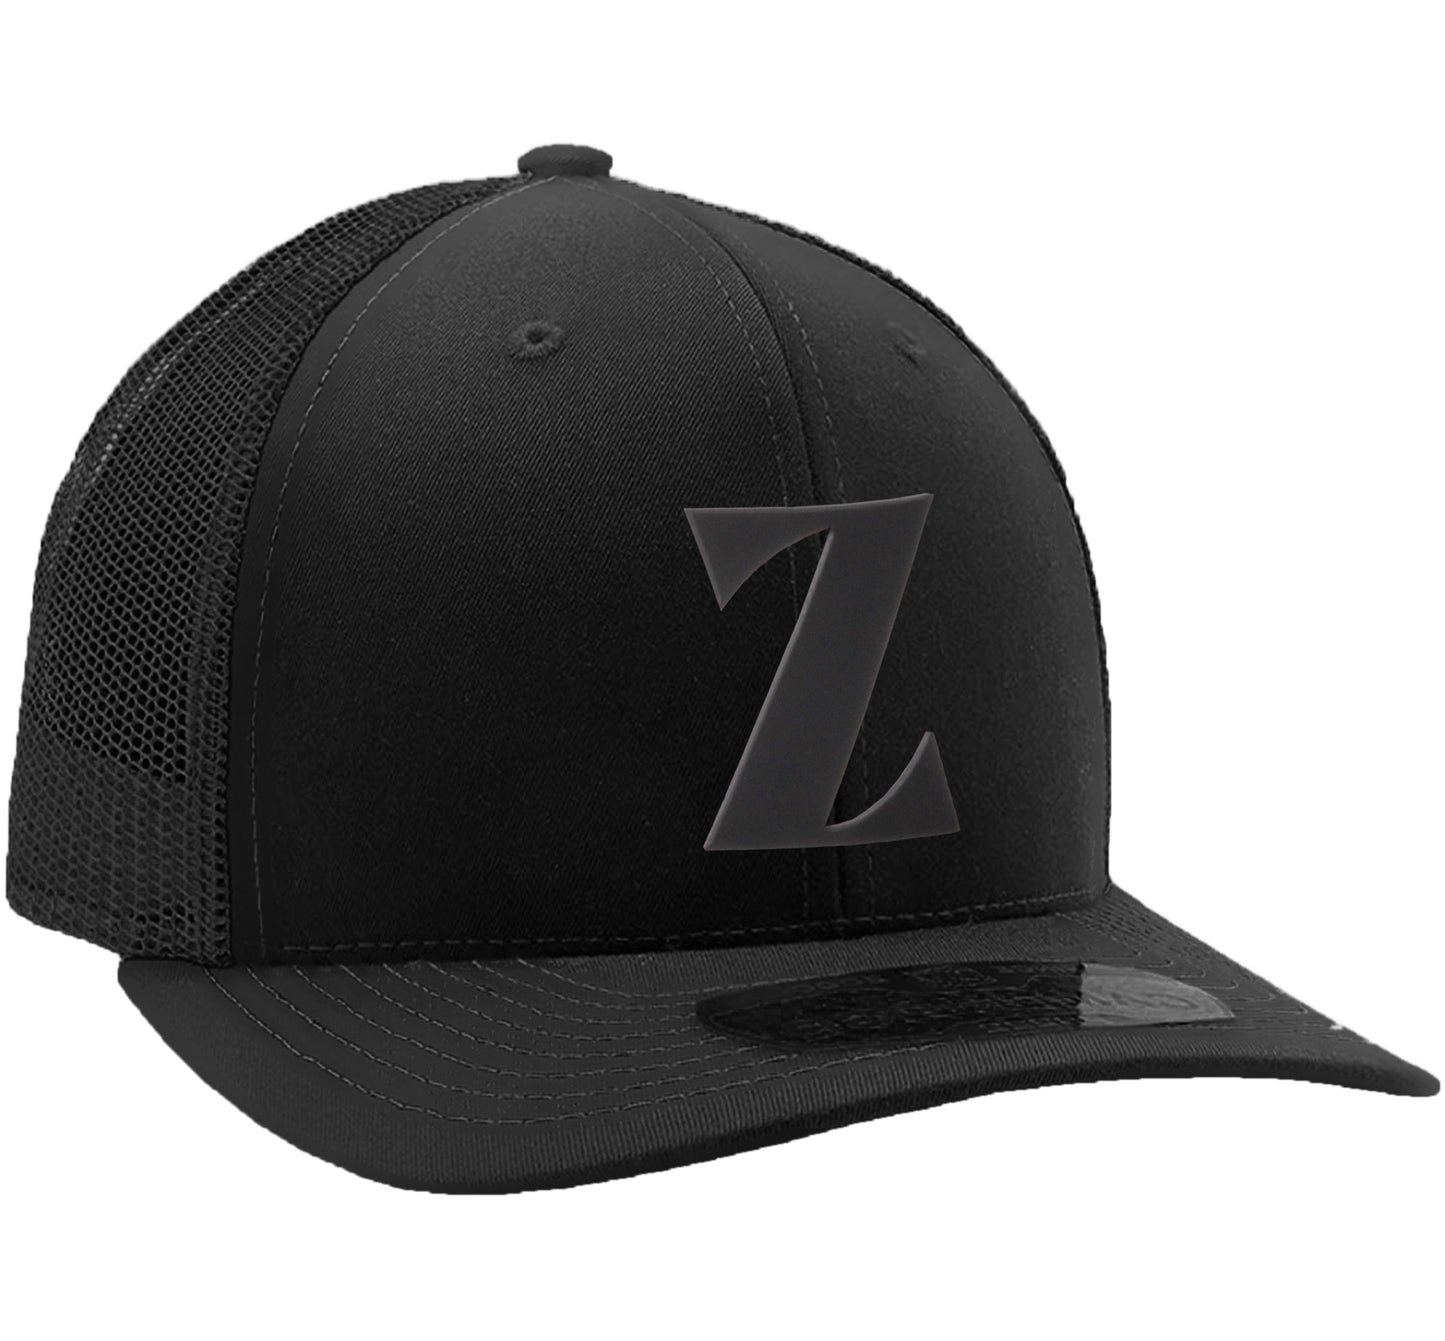 Daxton Baseball Trucker Hat 3D Capital Alphabet letters Structured Mid Profile Cap